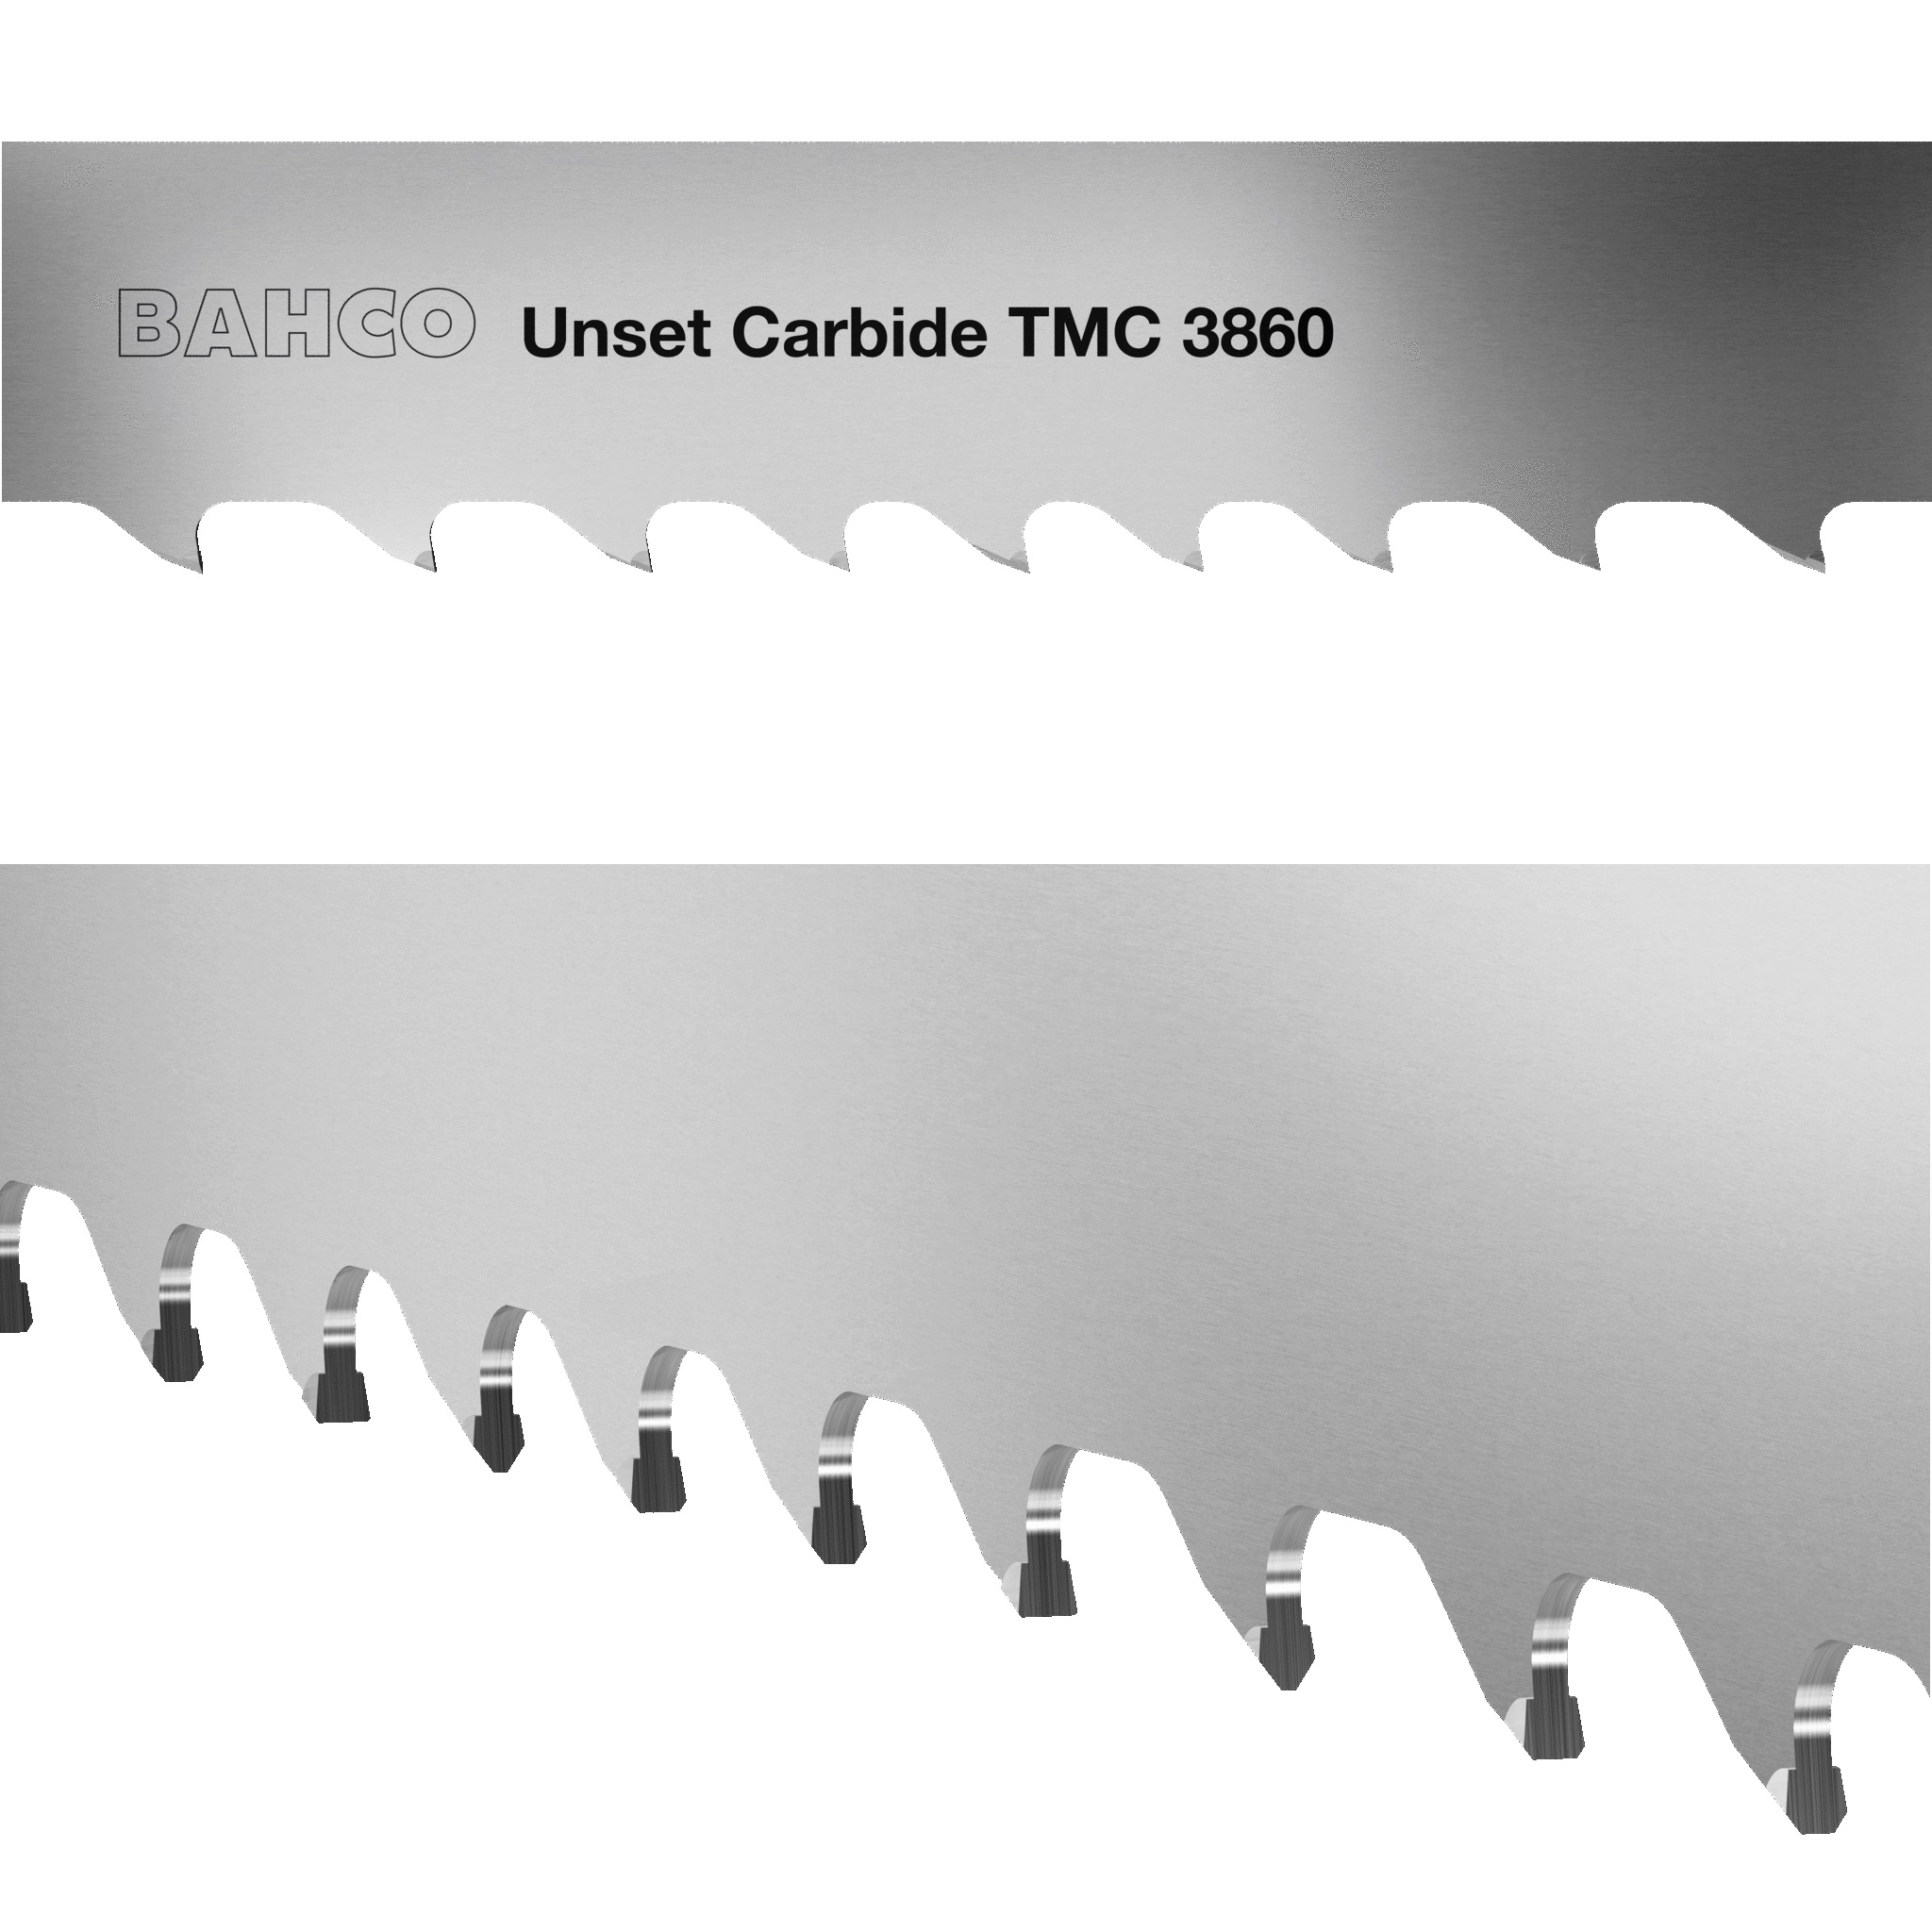 Bahco-Bandsaw Blades-3860 TMC Unset Carbide Bandsaw